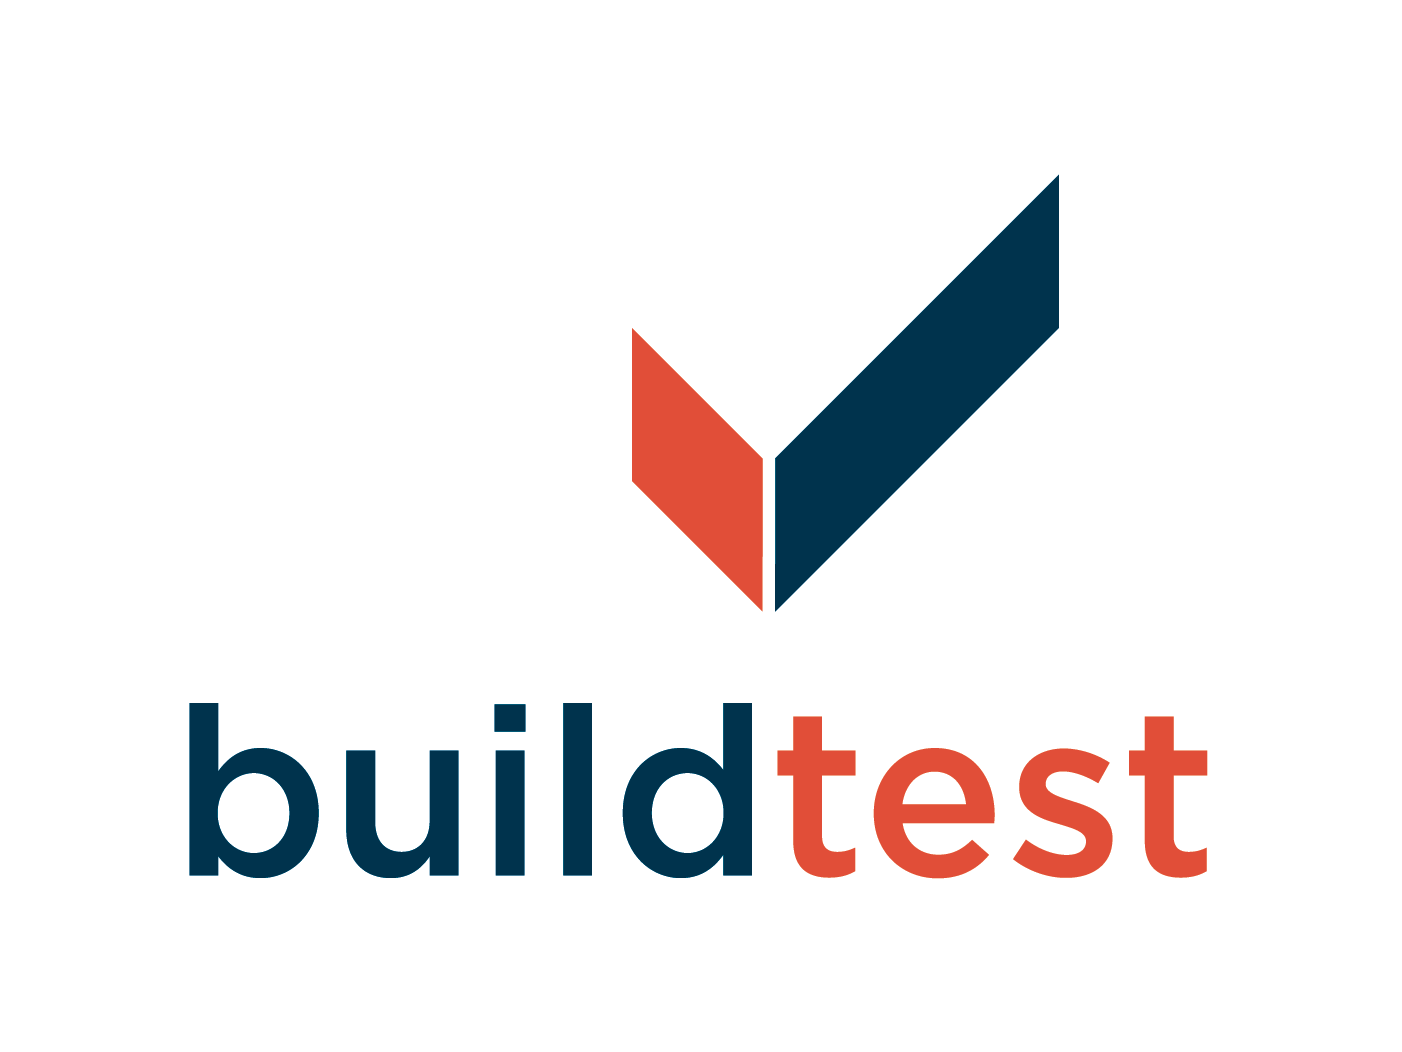 https://github.com/buildtesters/buildtest/blob/devel/logos/BuildTest_Primary_Center_4x3.png